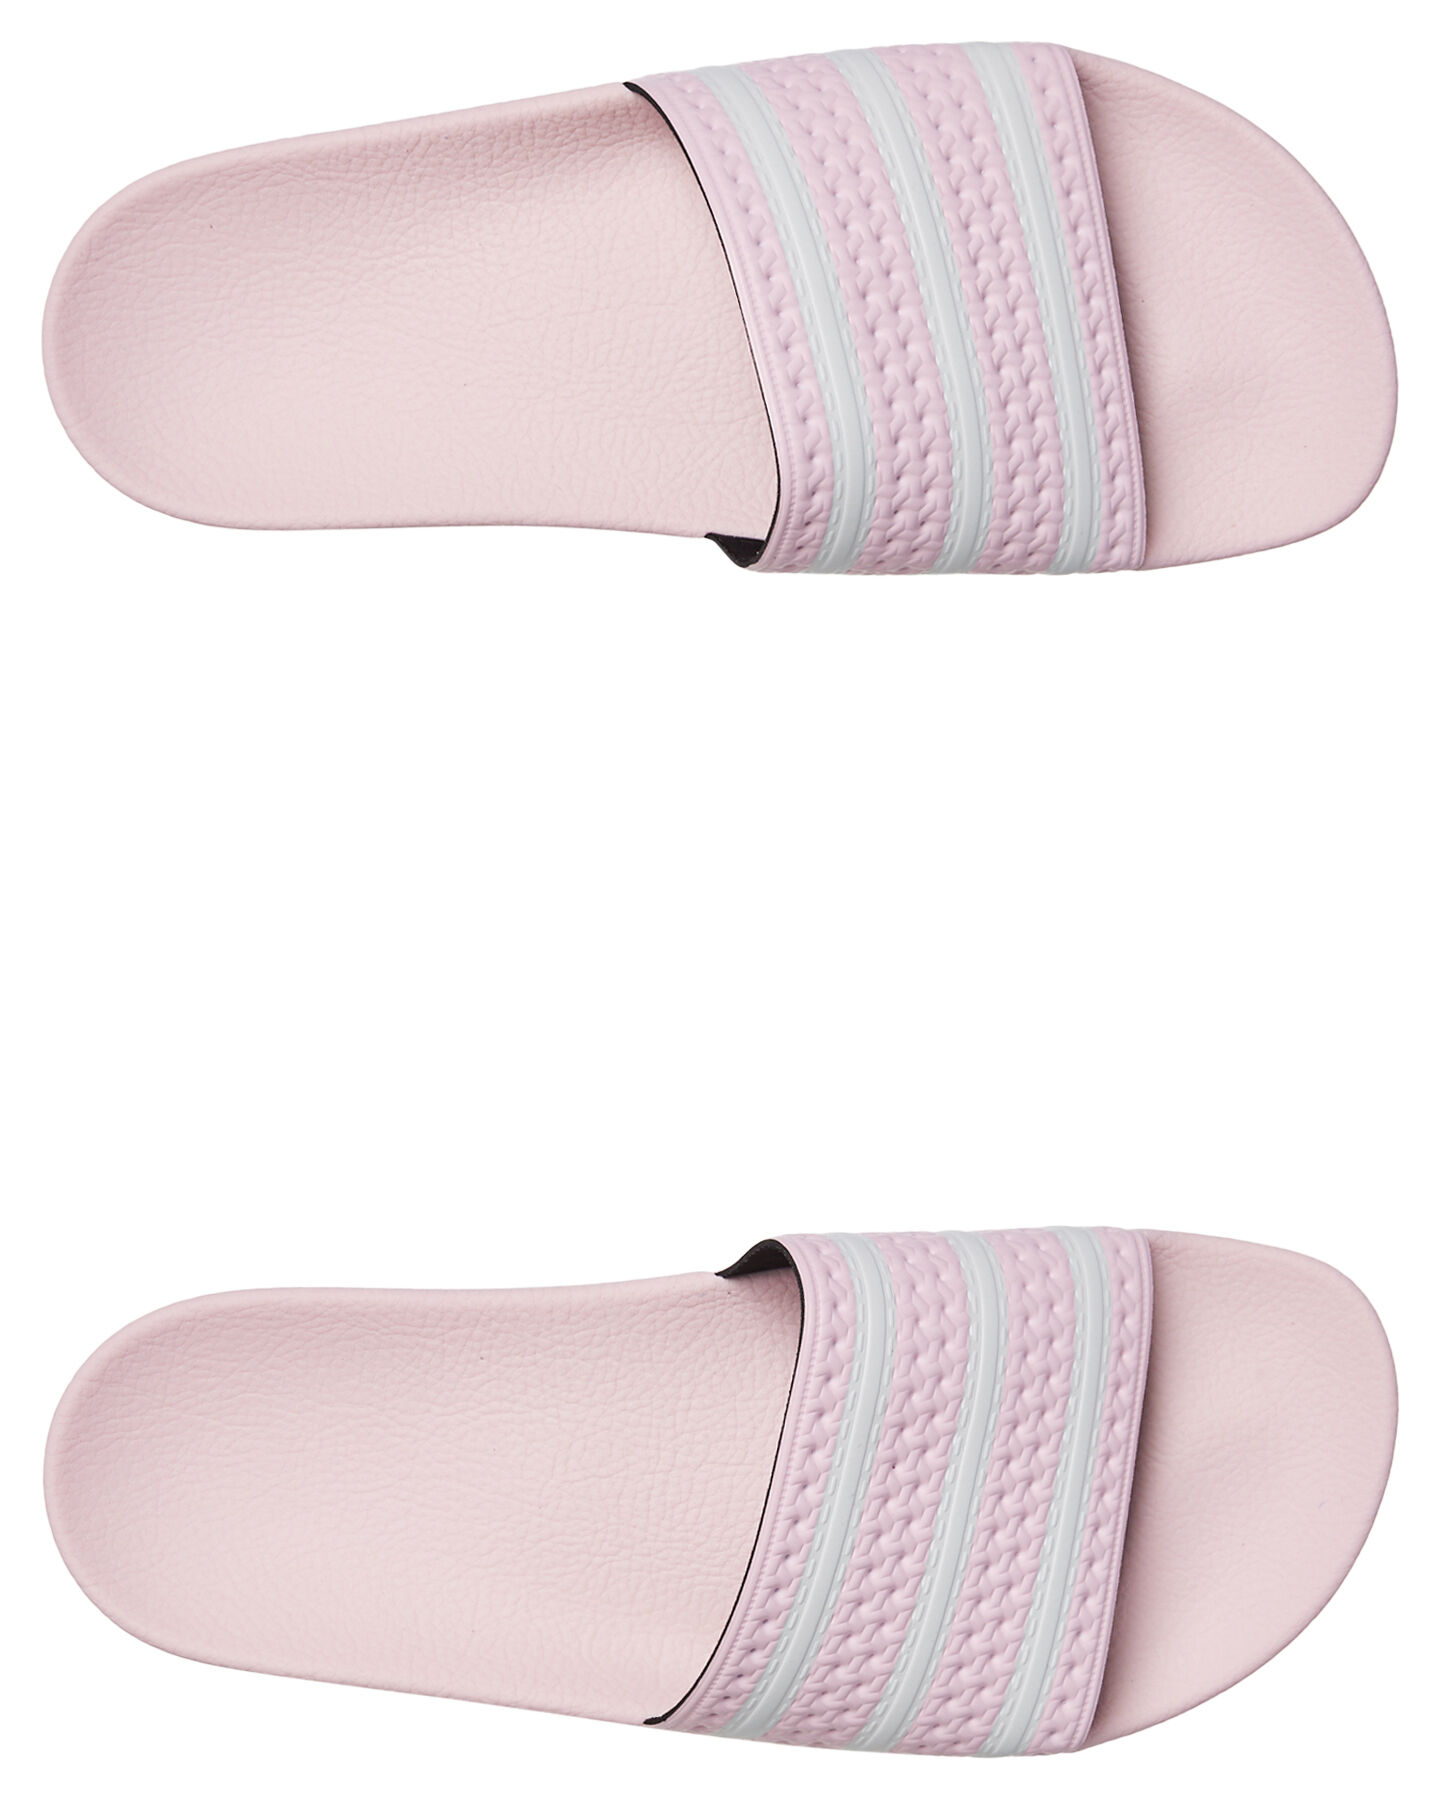 adidas slide pink